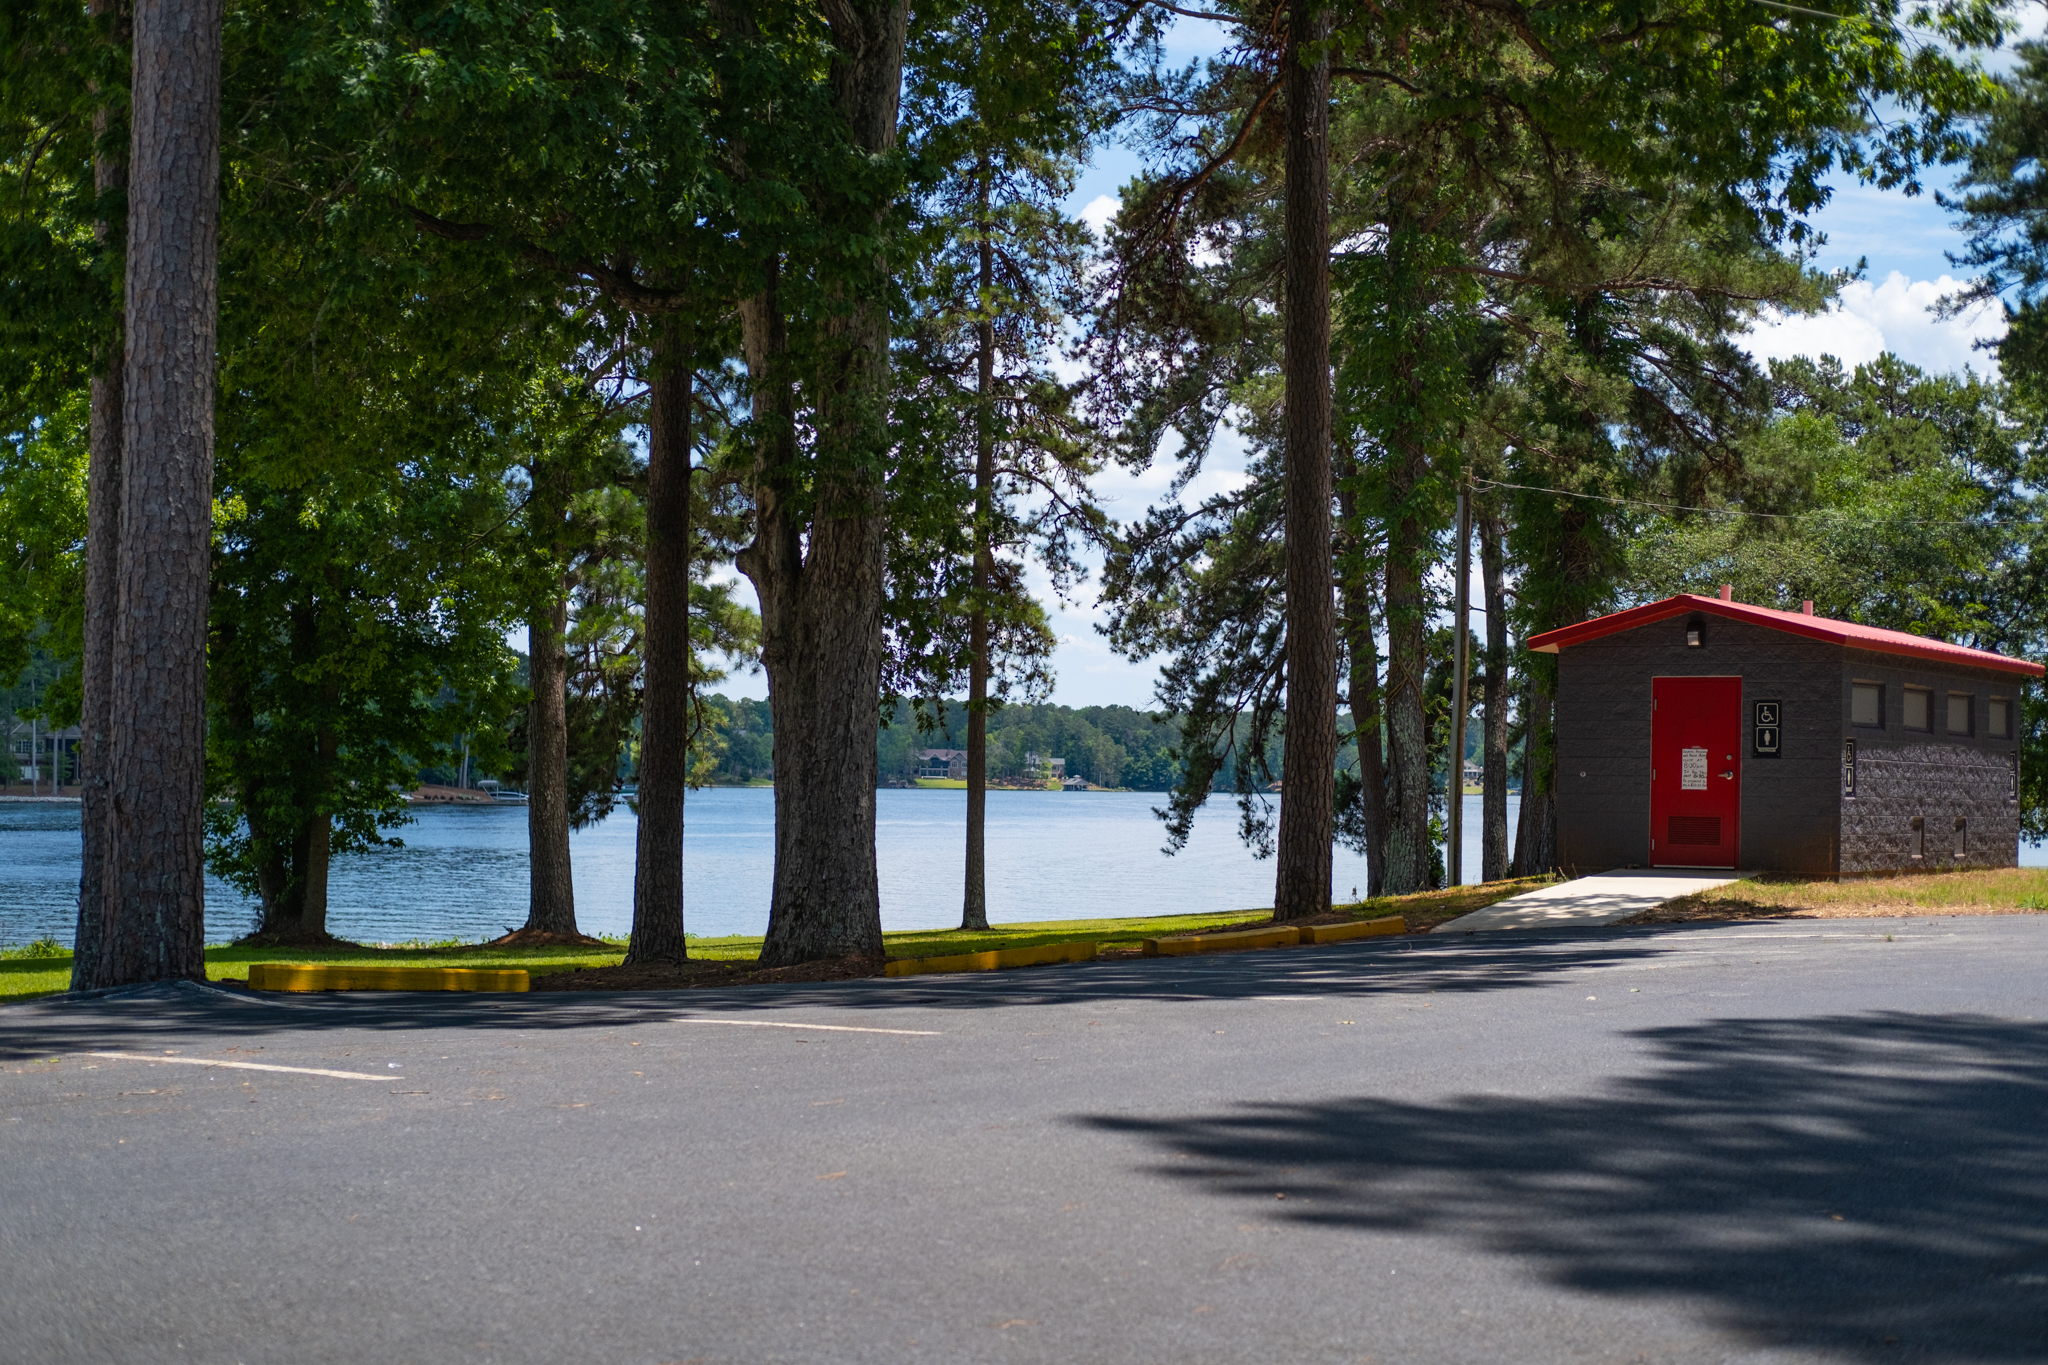 Entrance to the Old Salem Park in Lake Oconee, Georgia